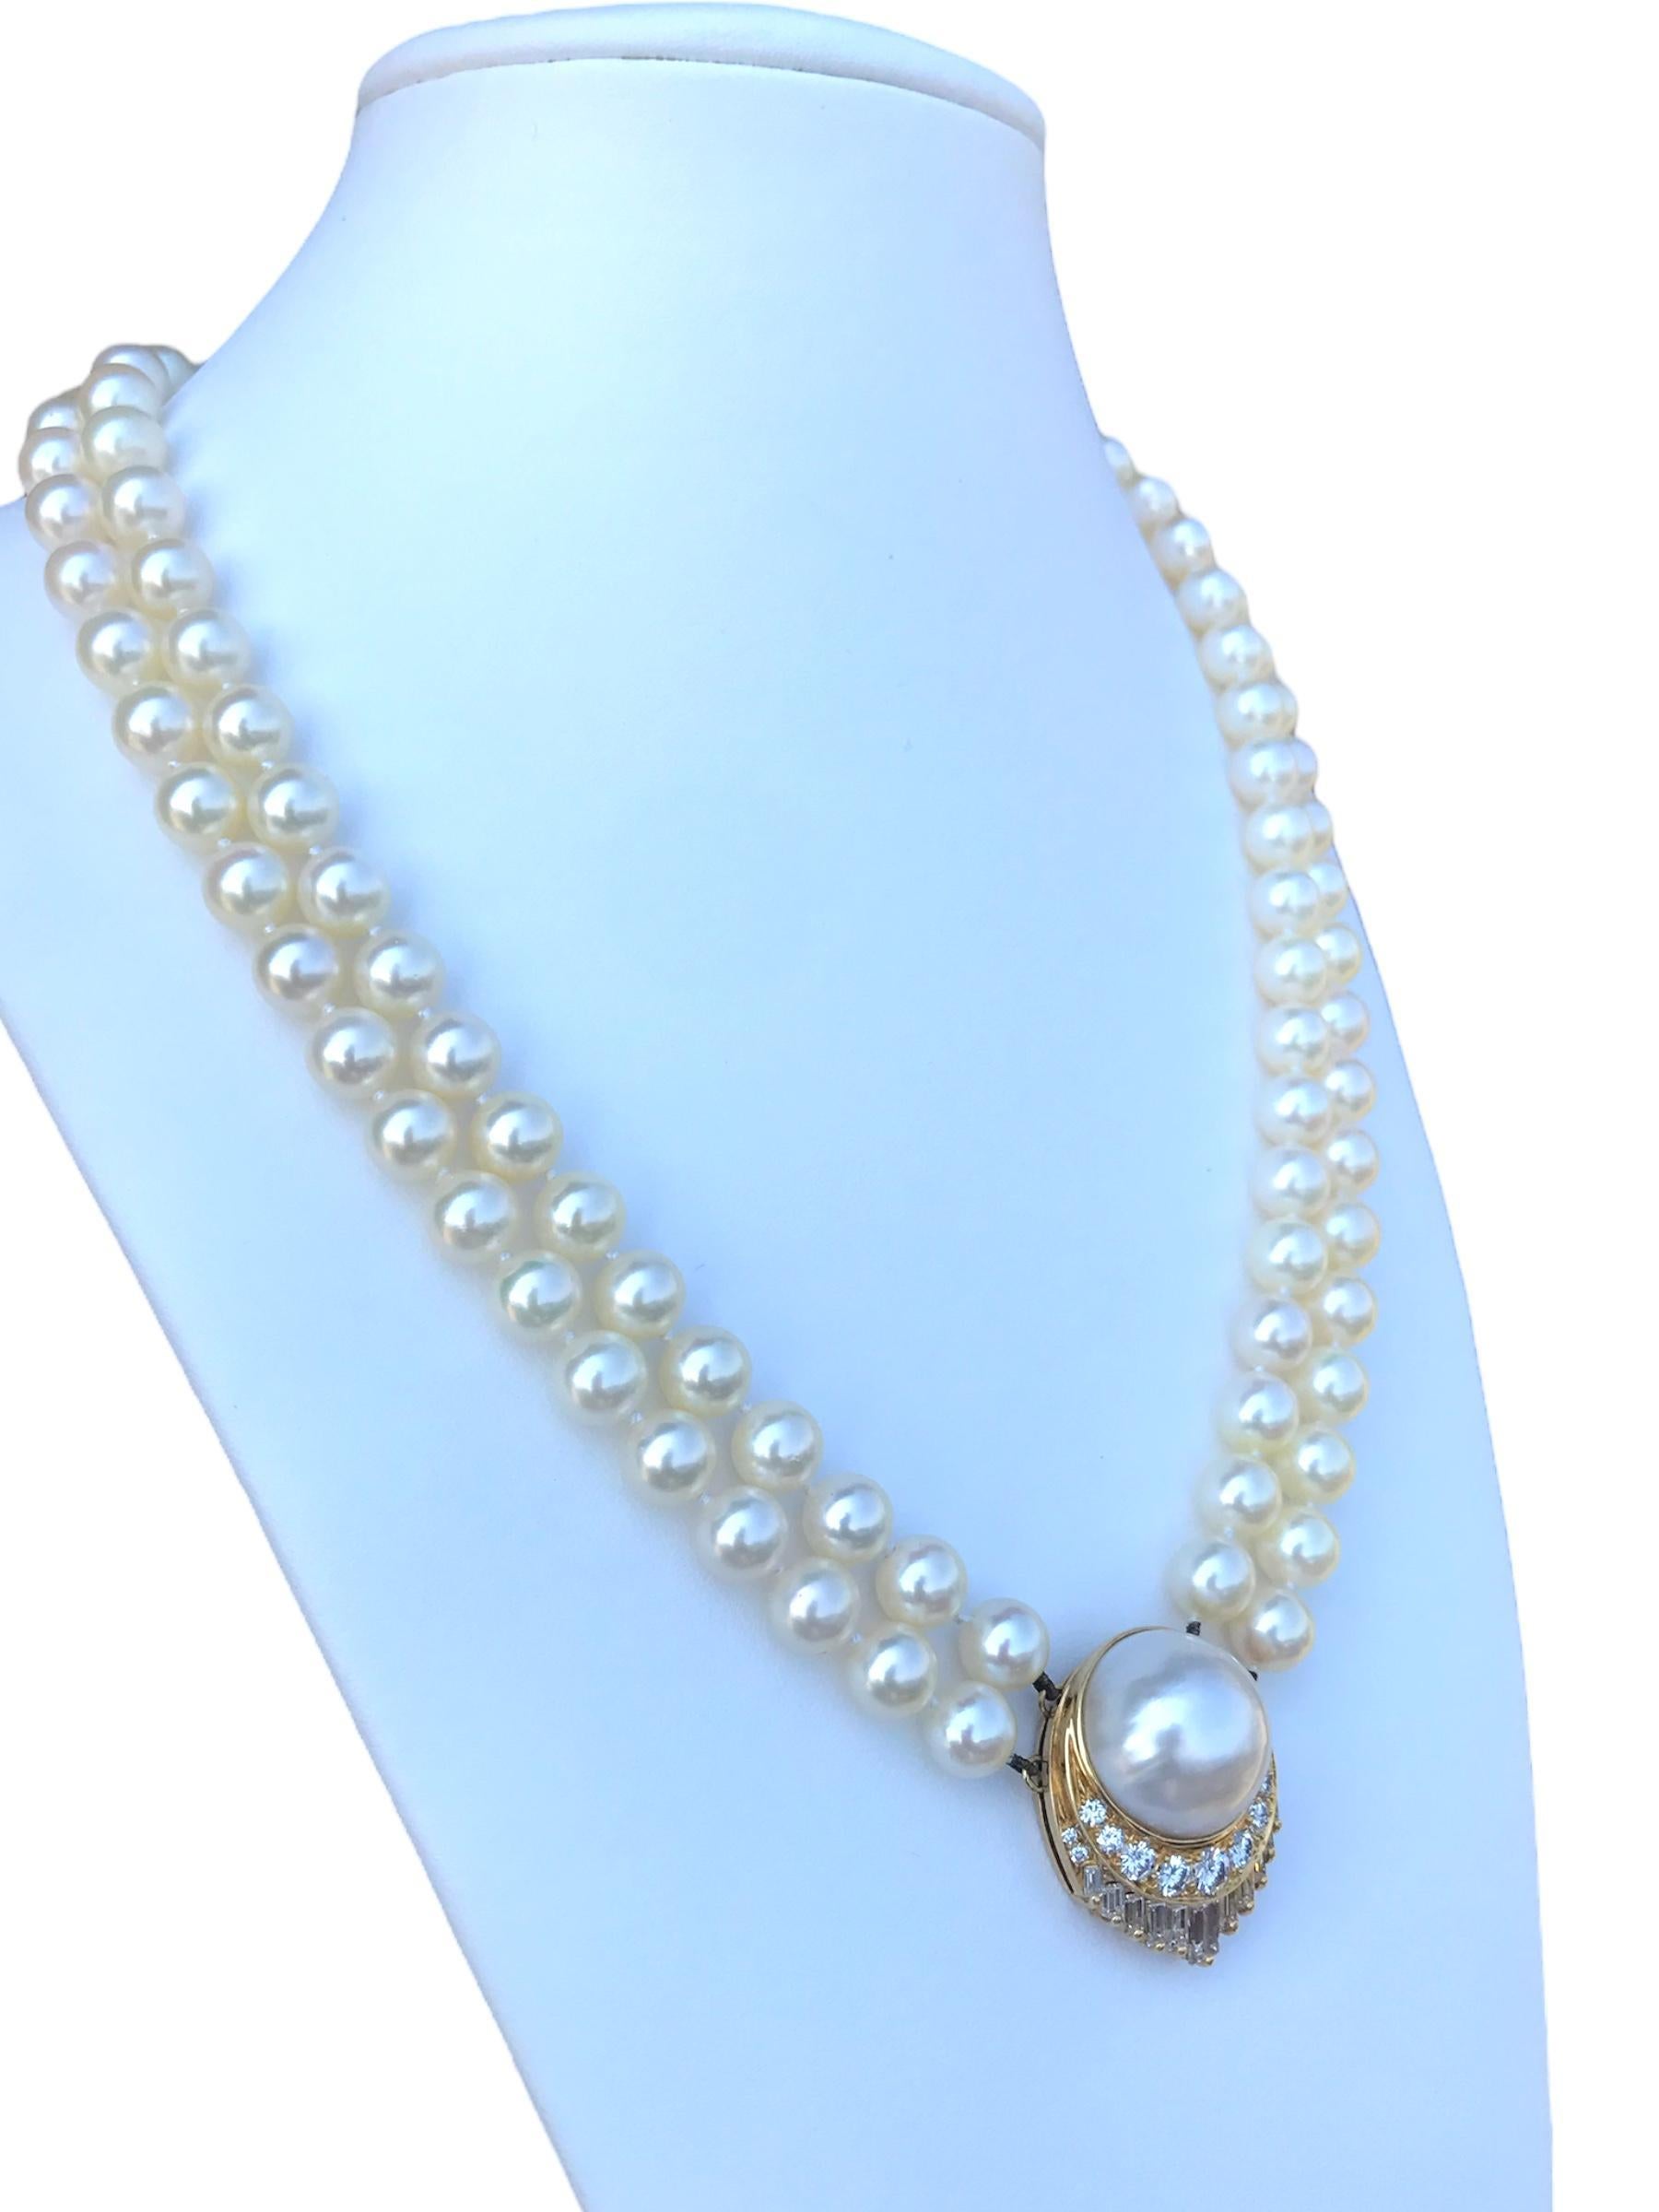 Retro Pearl Diamond Necklace 2 Carats In Excellent Condition For Sale In Montgomery, AL